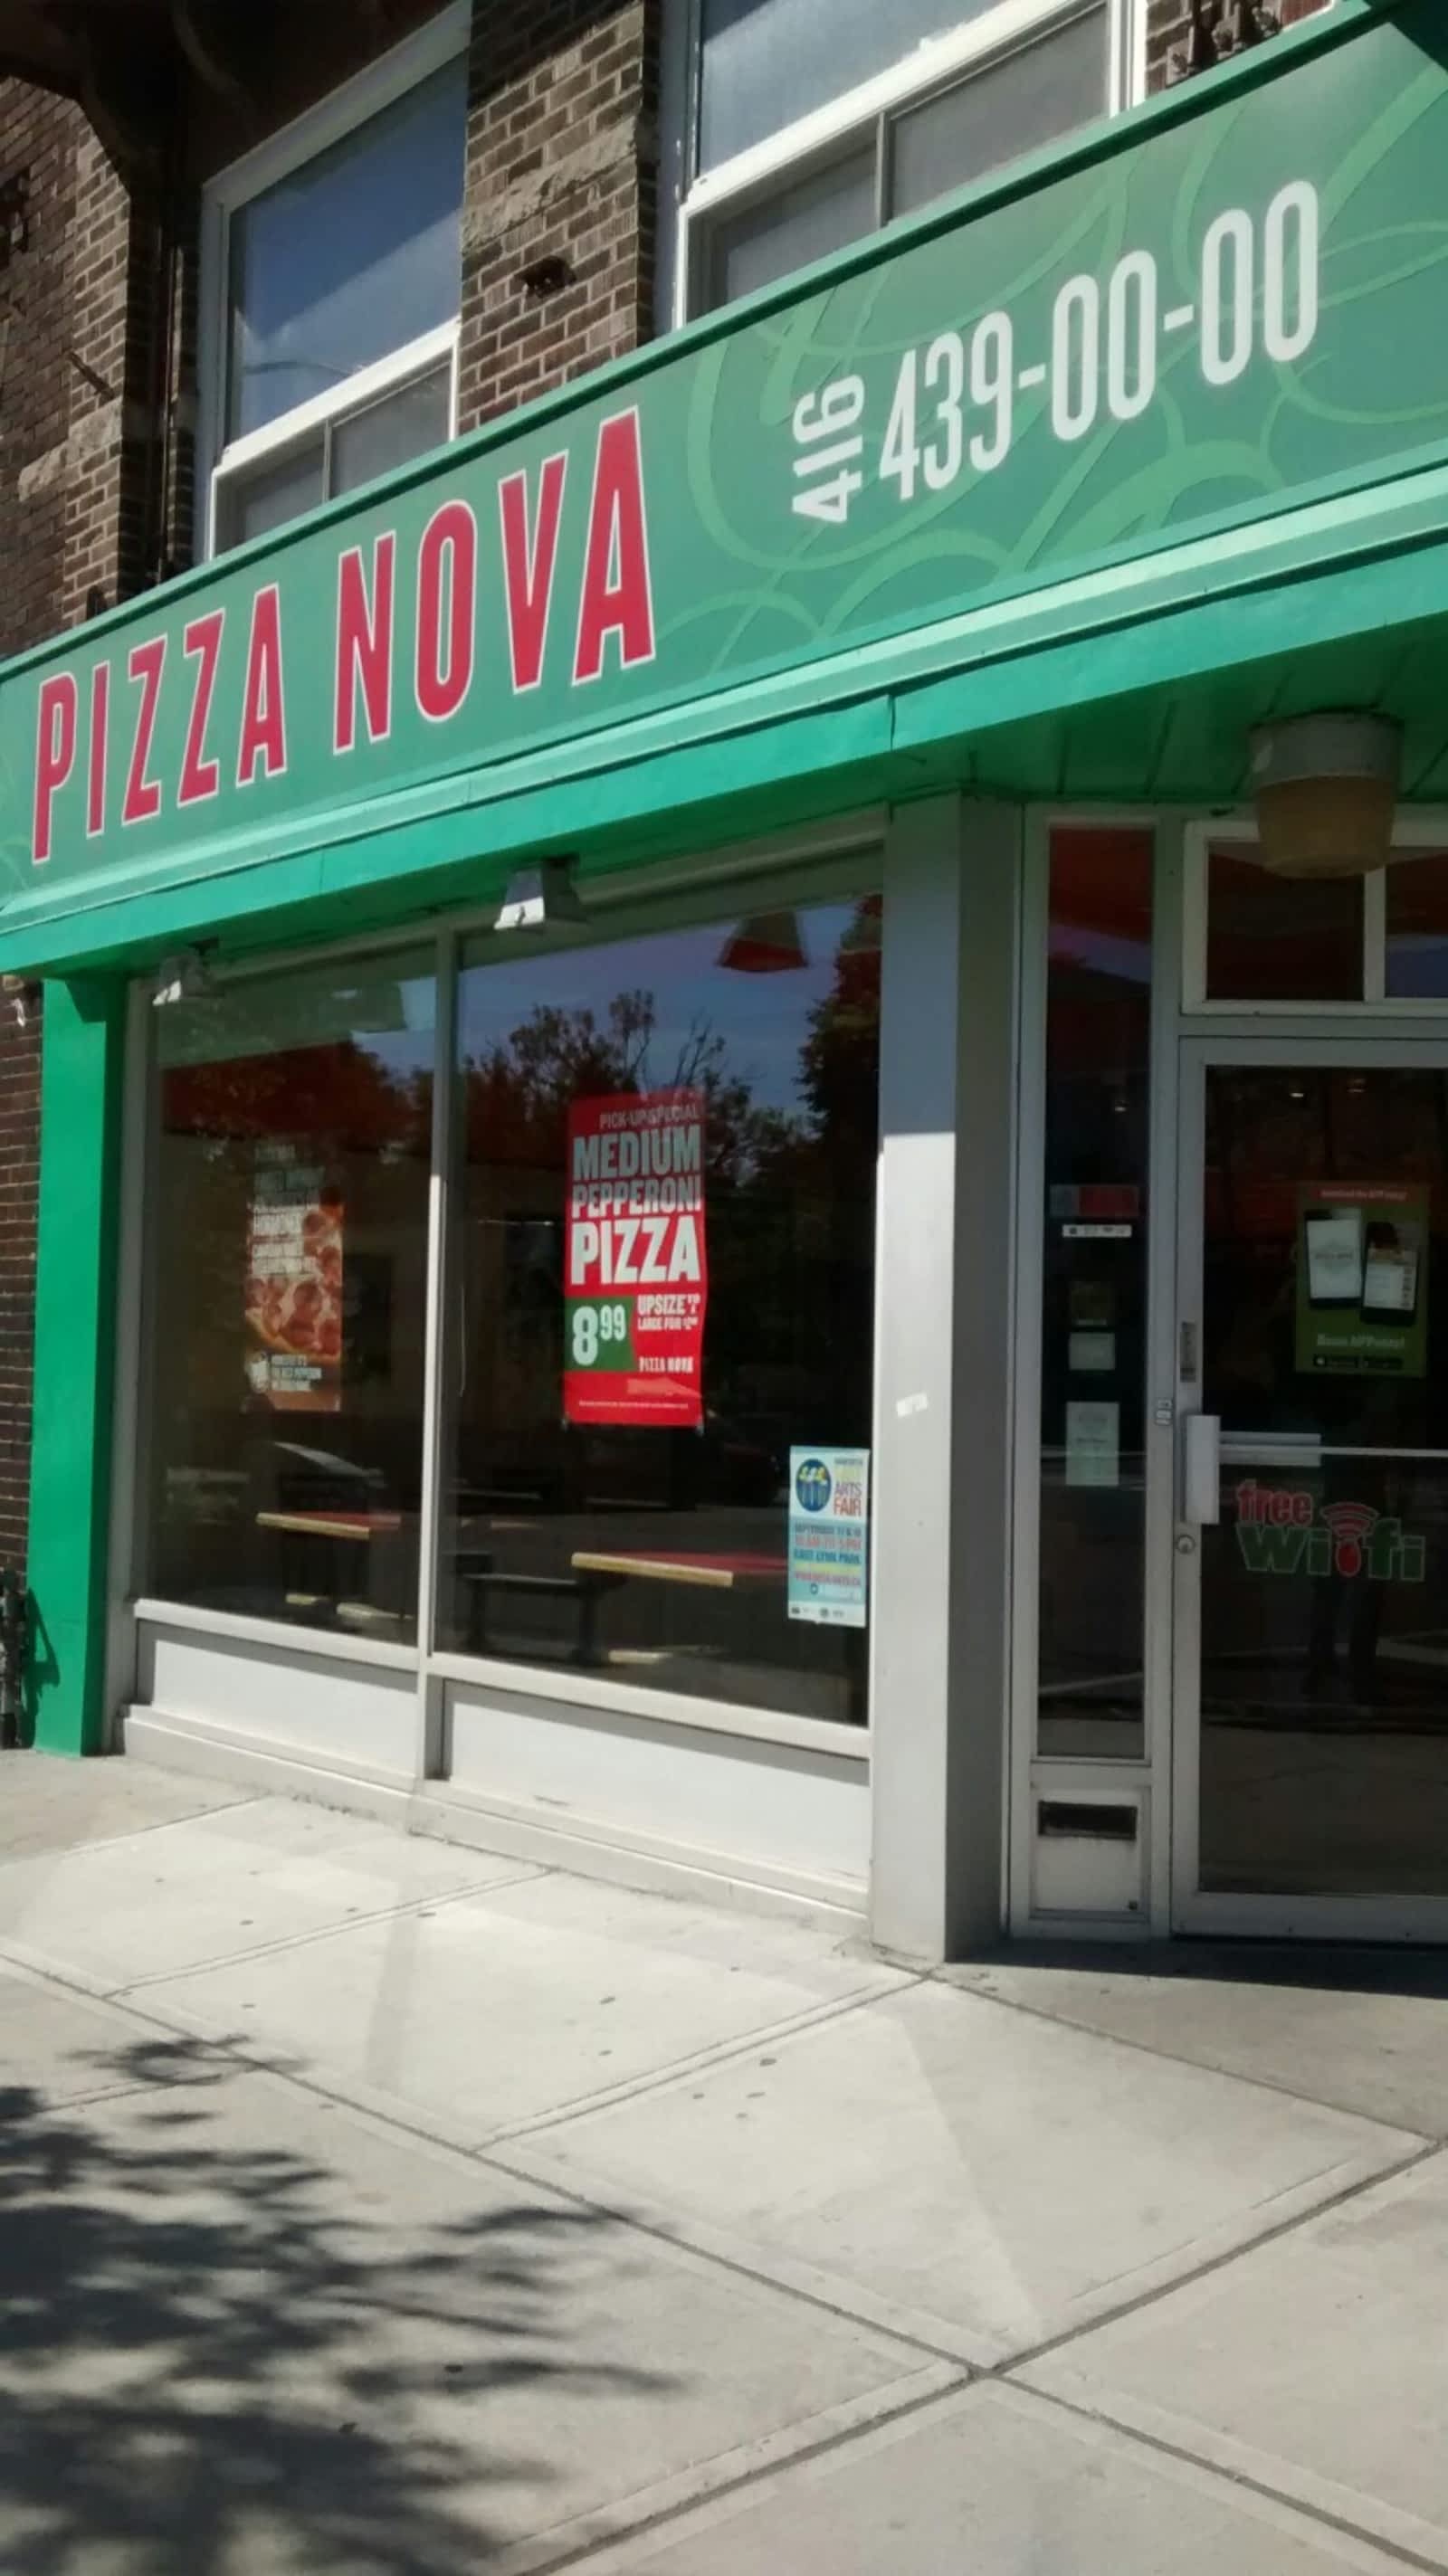 lanovas pizza